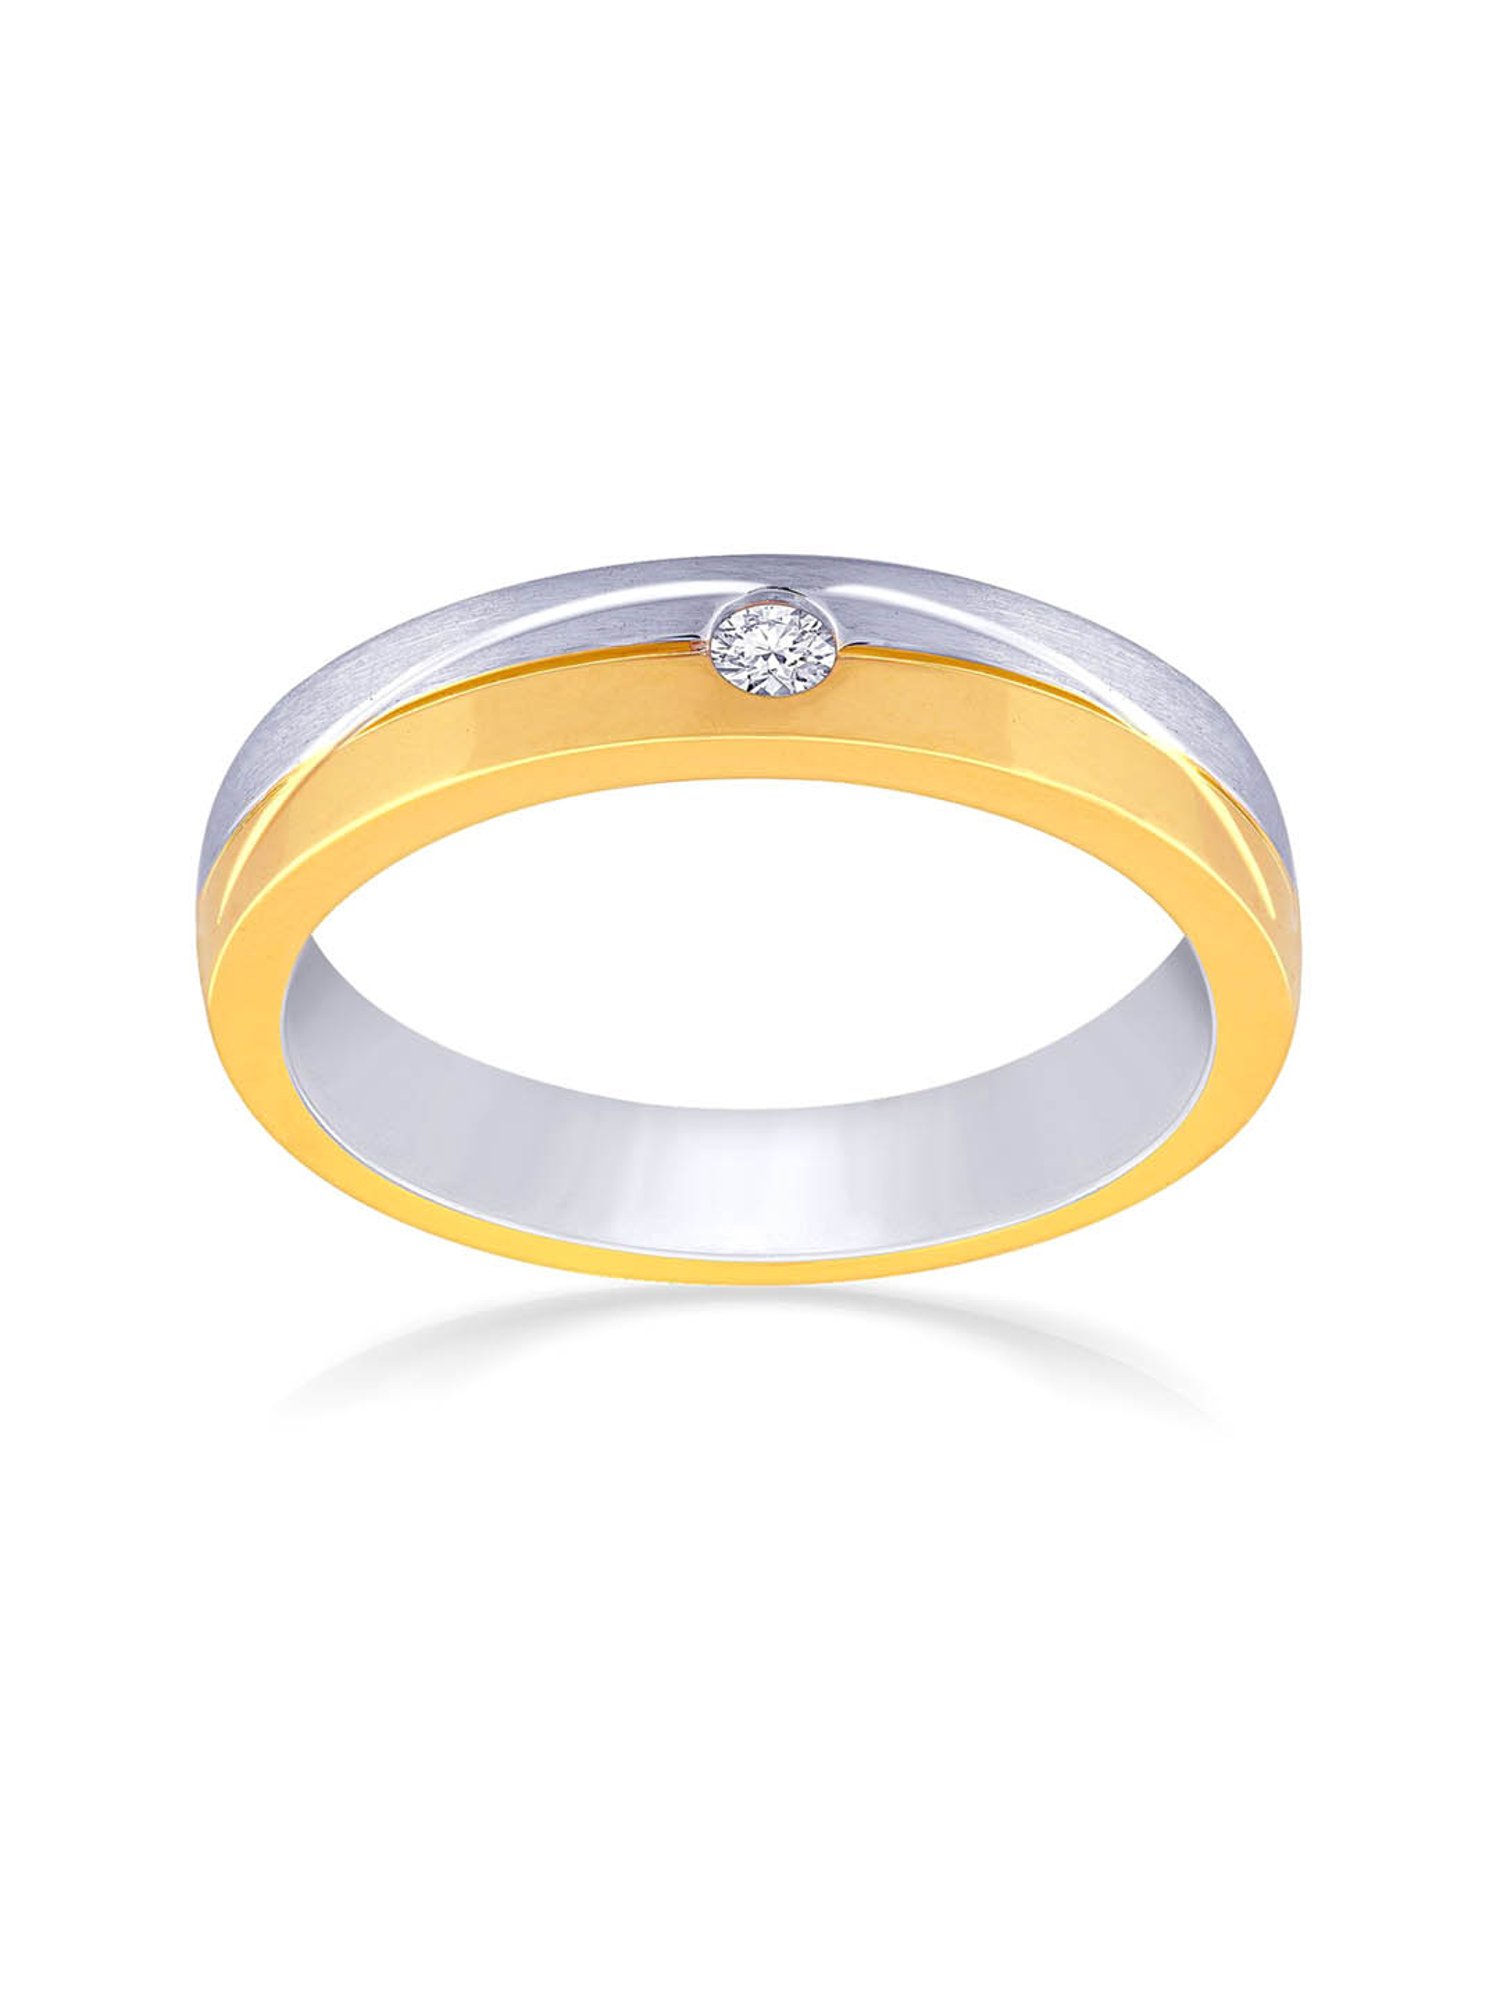 Malabar Gold & Diamonds 18k (750) Yellow Gold and Diamond Ring for Women :  Amazon.in: Fashion